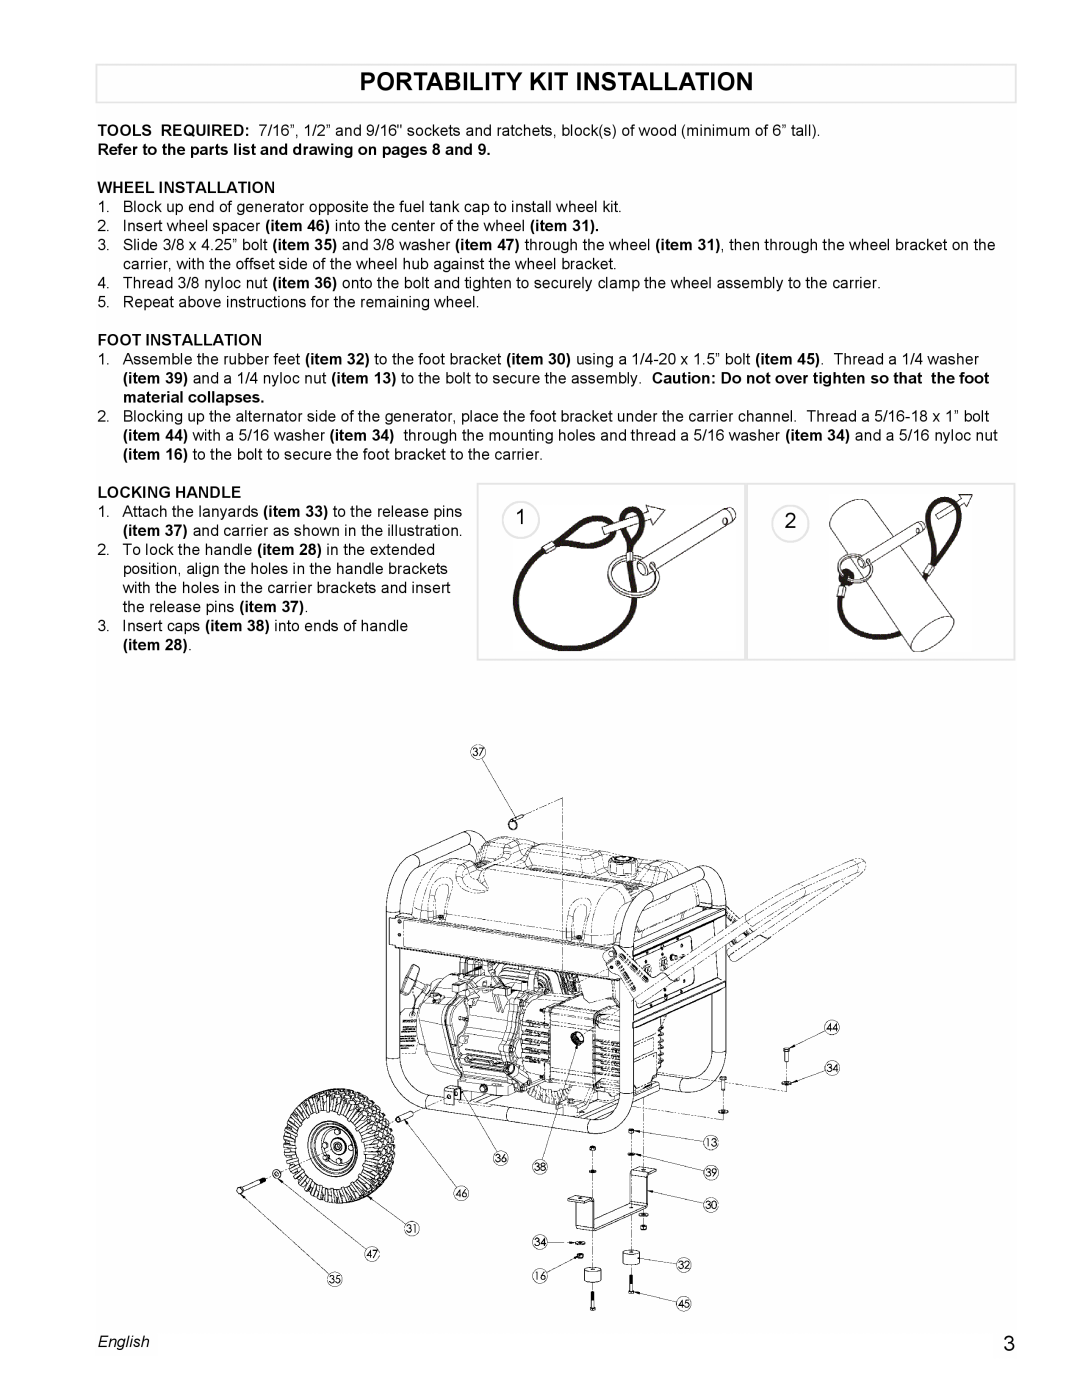 Powermate PM0434600 manual Portability Kit Installation, Wheel Installation, Foot Installation, Locking Handle, English 